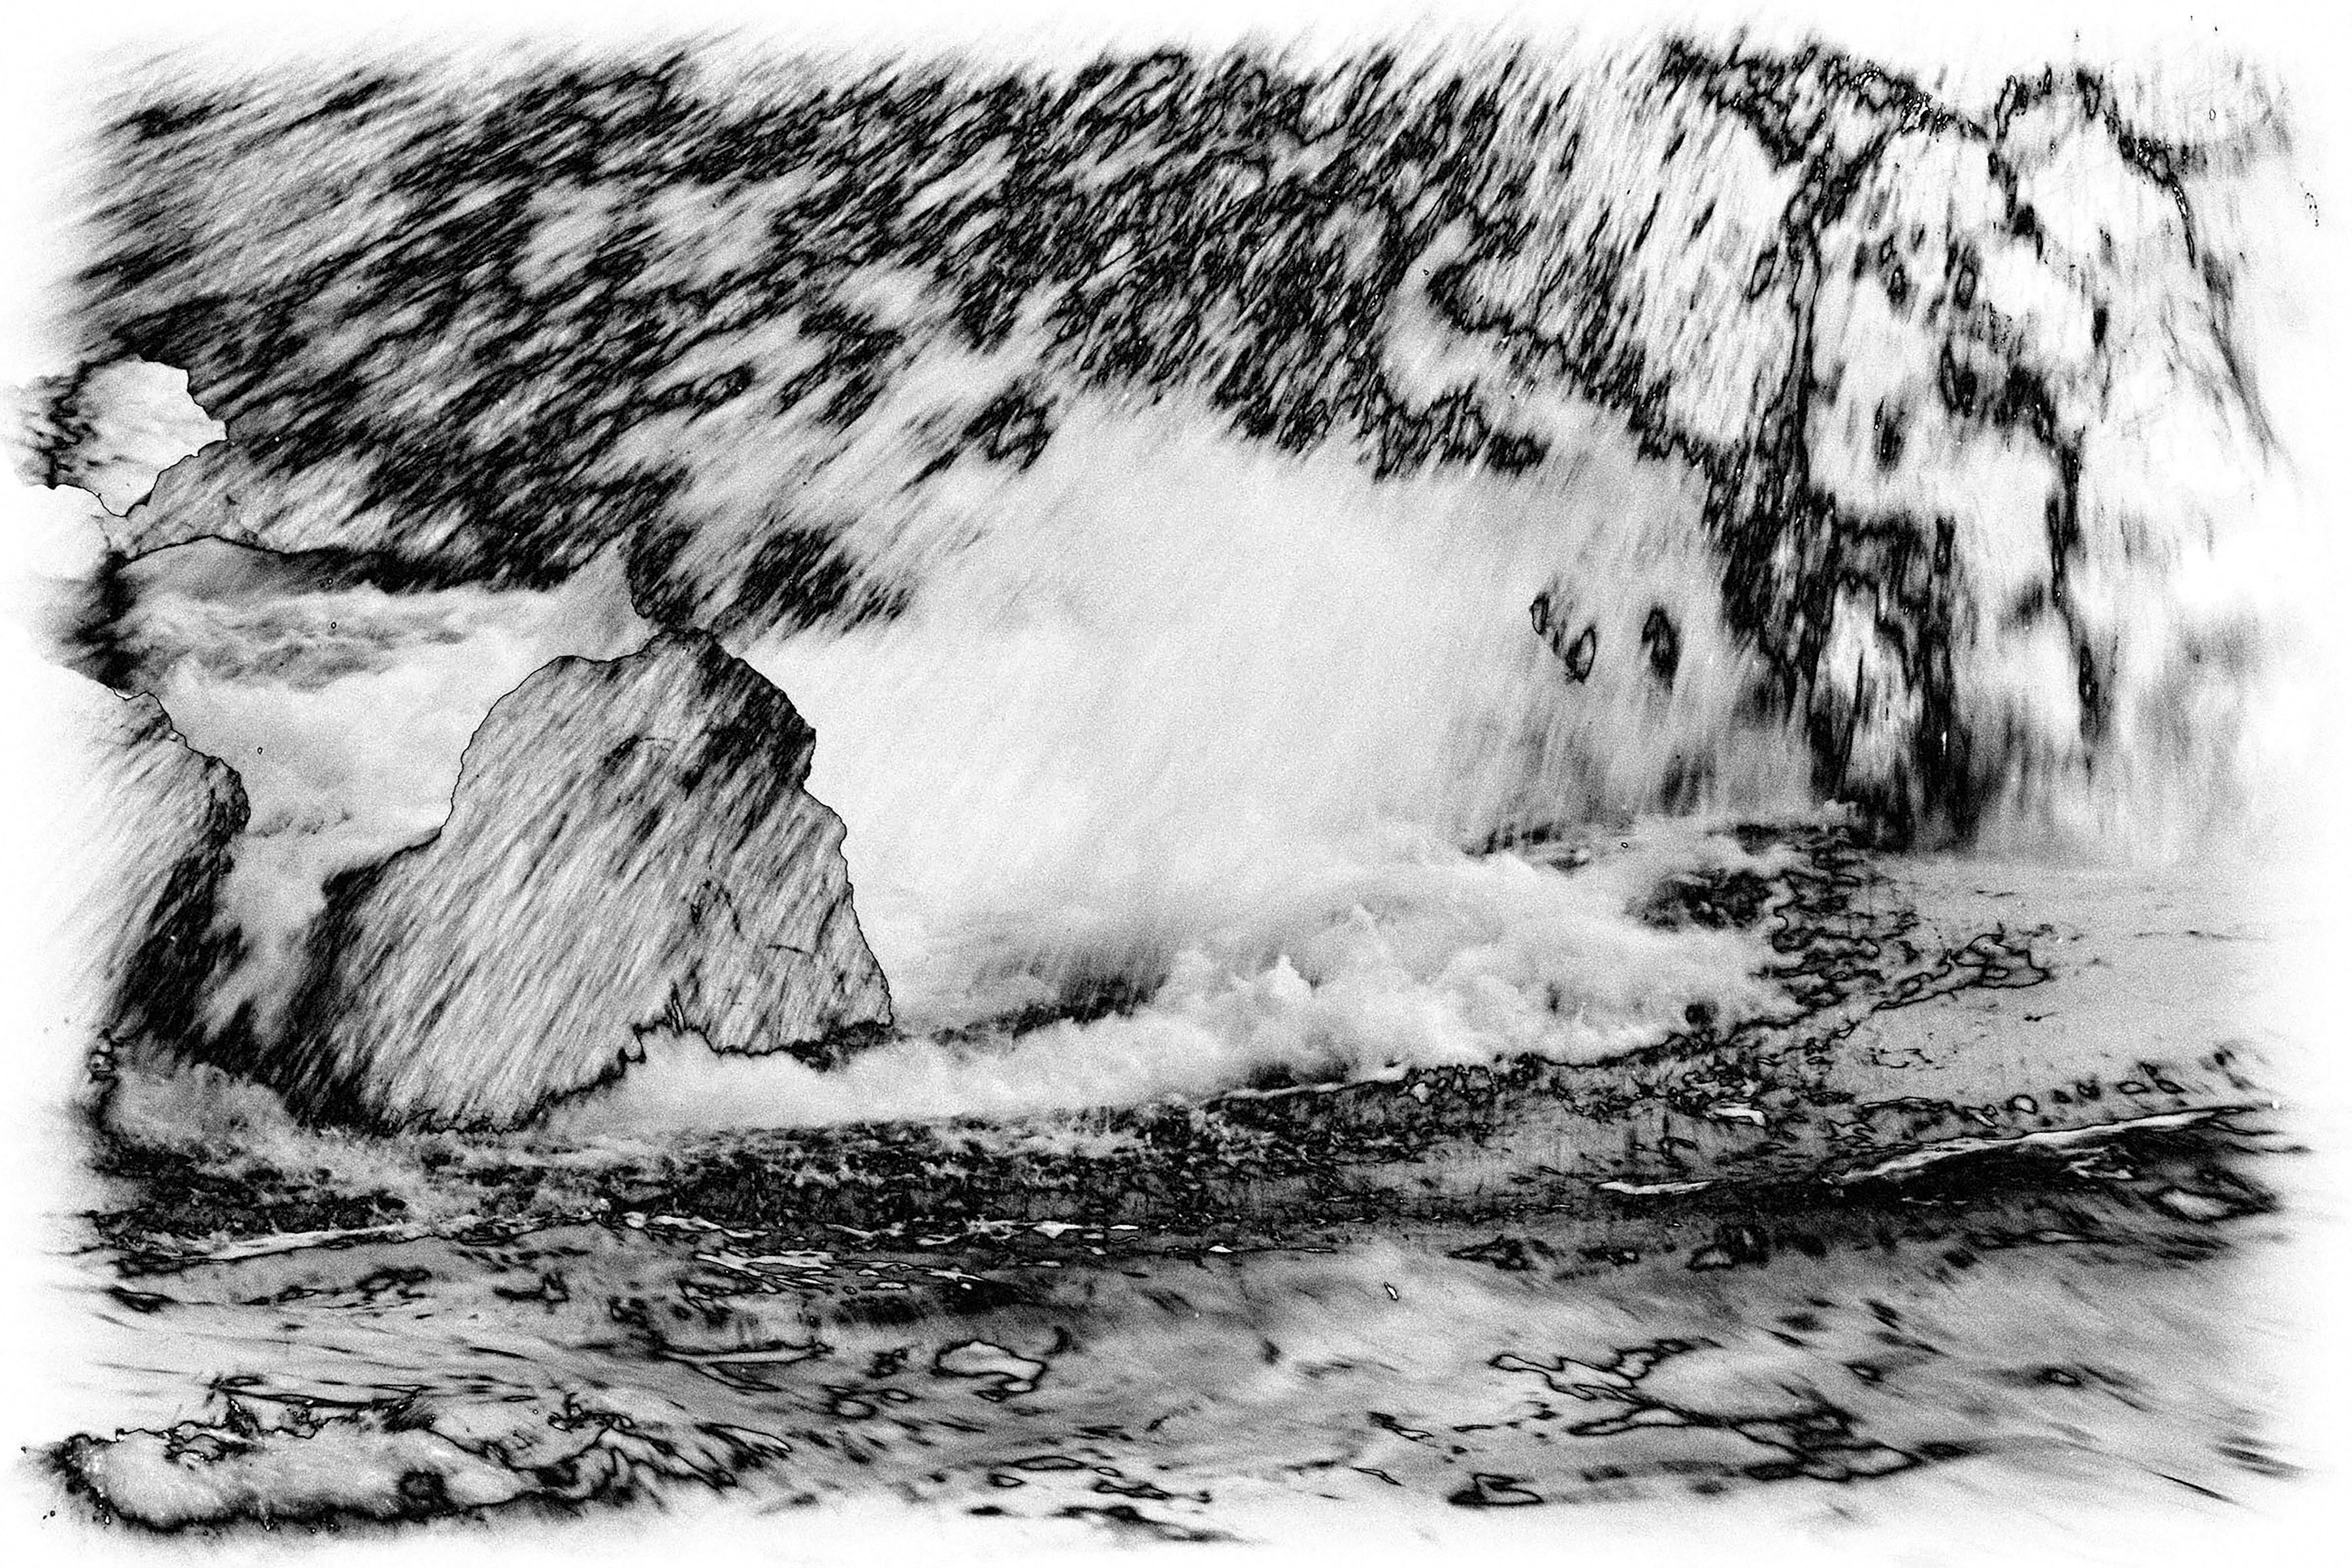 Holly Gordon Landscape Photograph - Water Music Series #4992 : landscape photography